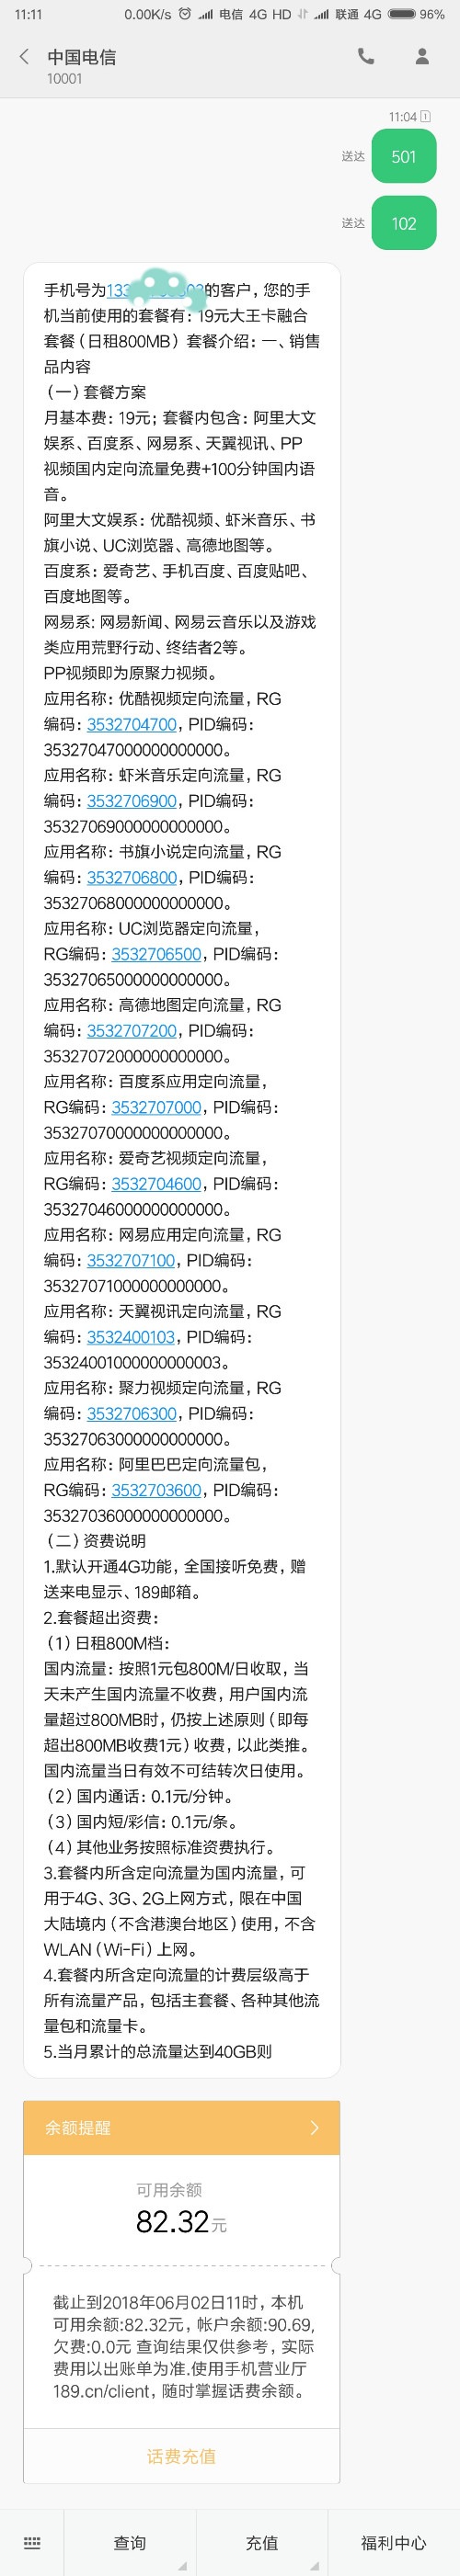 Screenshot_2018-06-02-11-11-26-465_com.android.mms.png